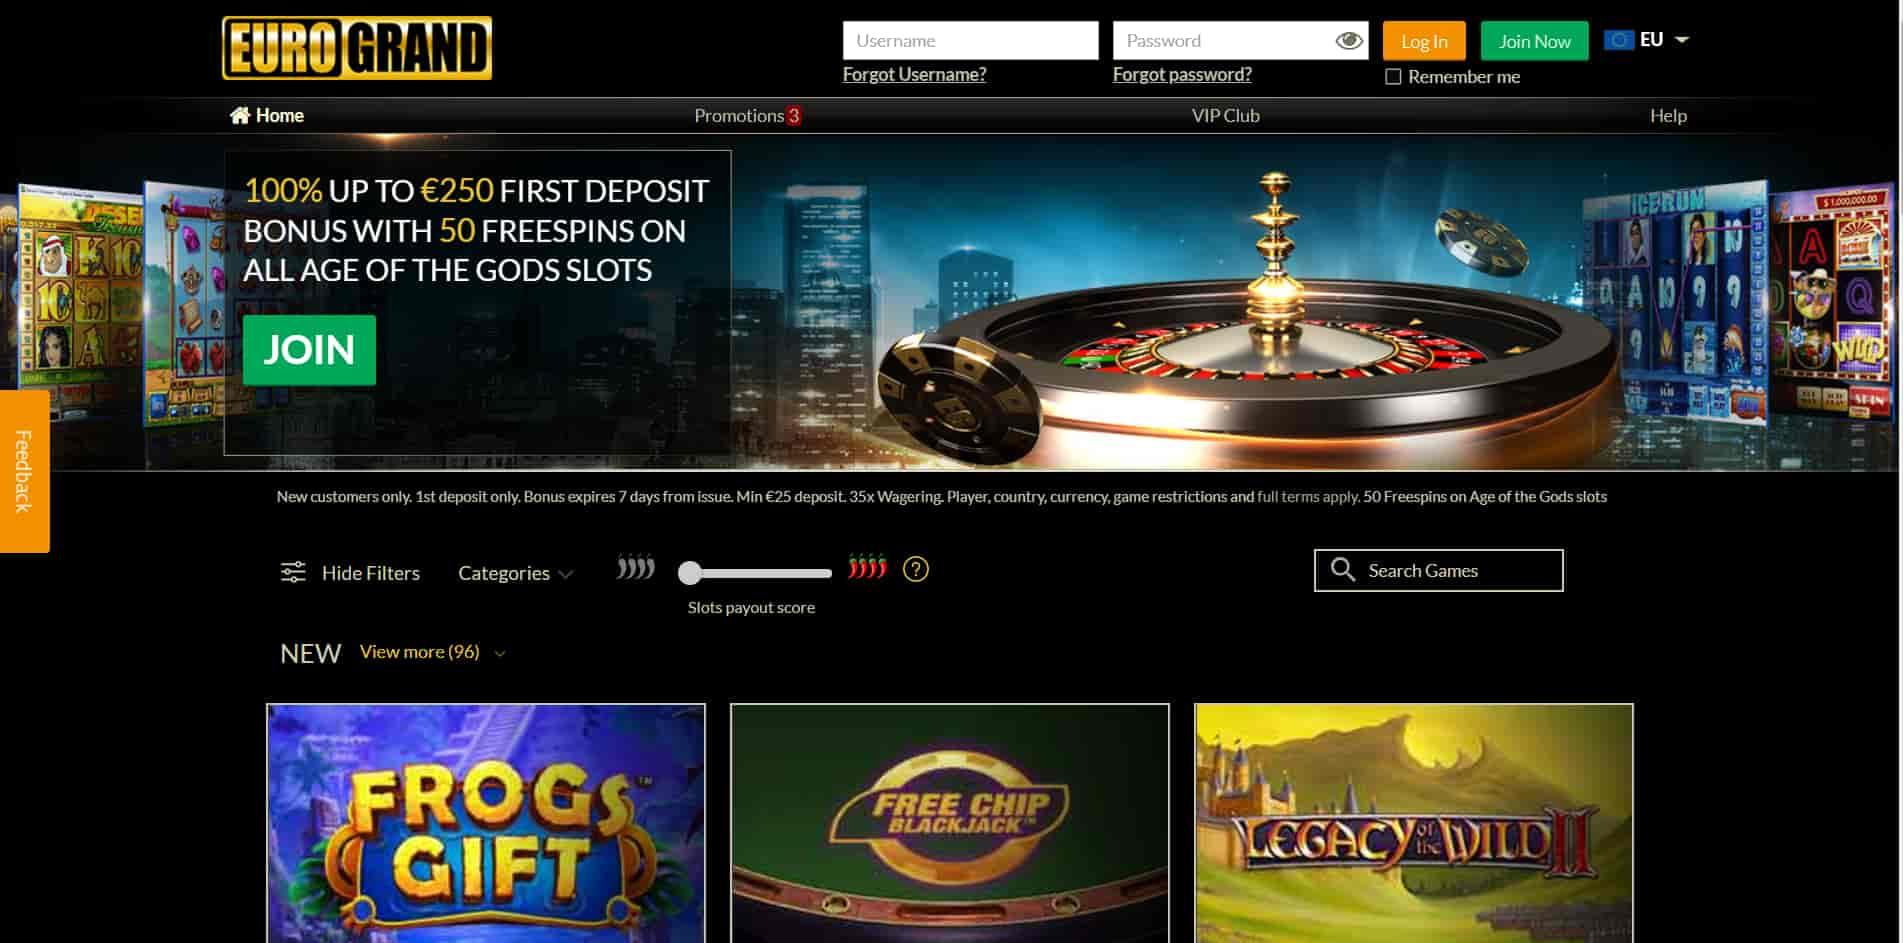 Eurogrand casino homepage